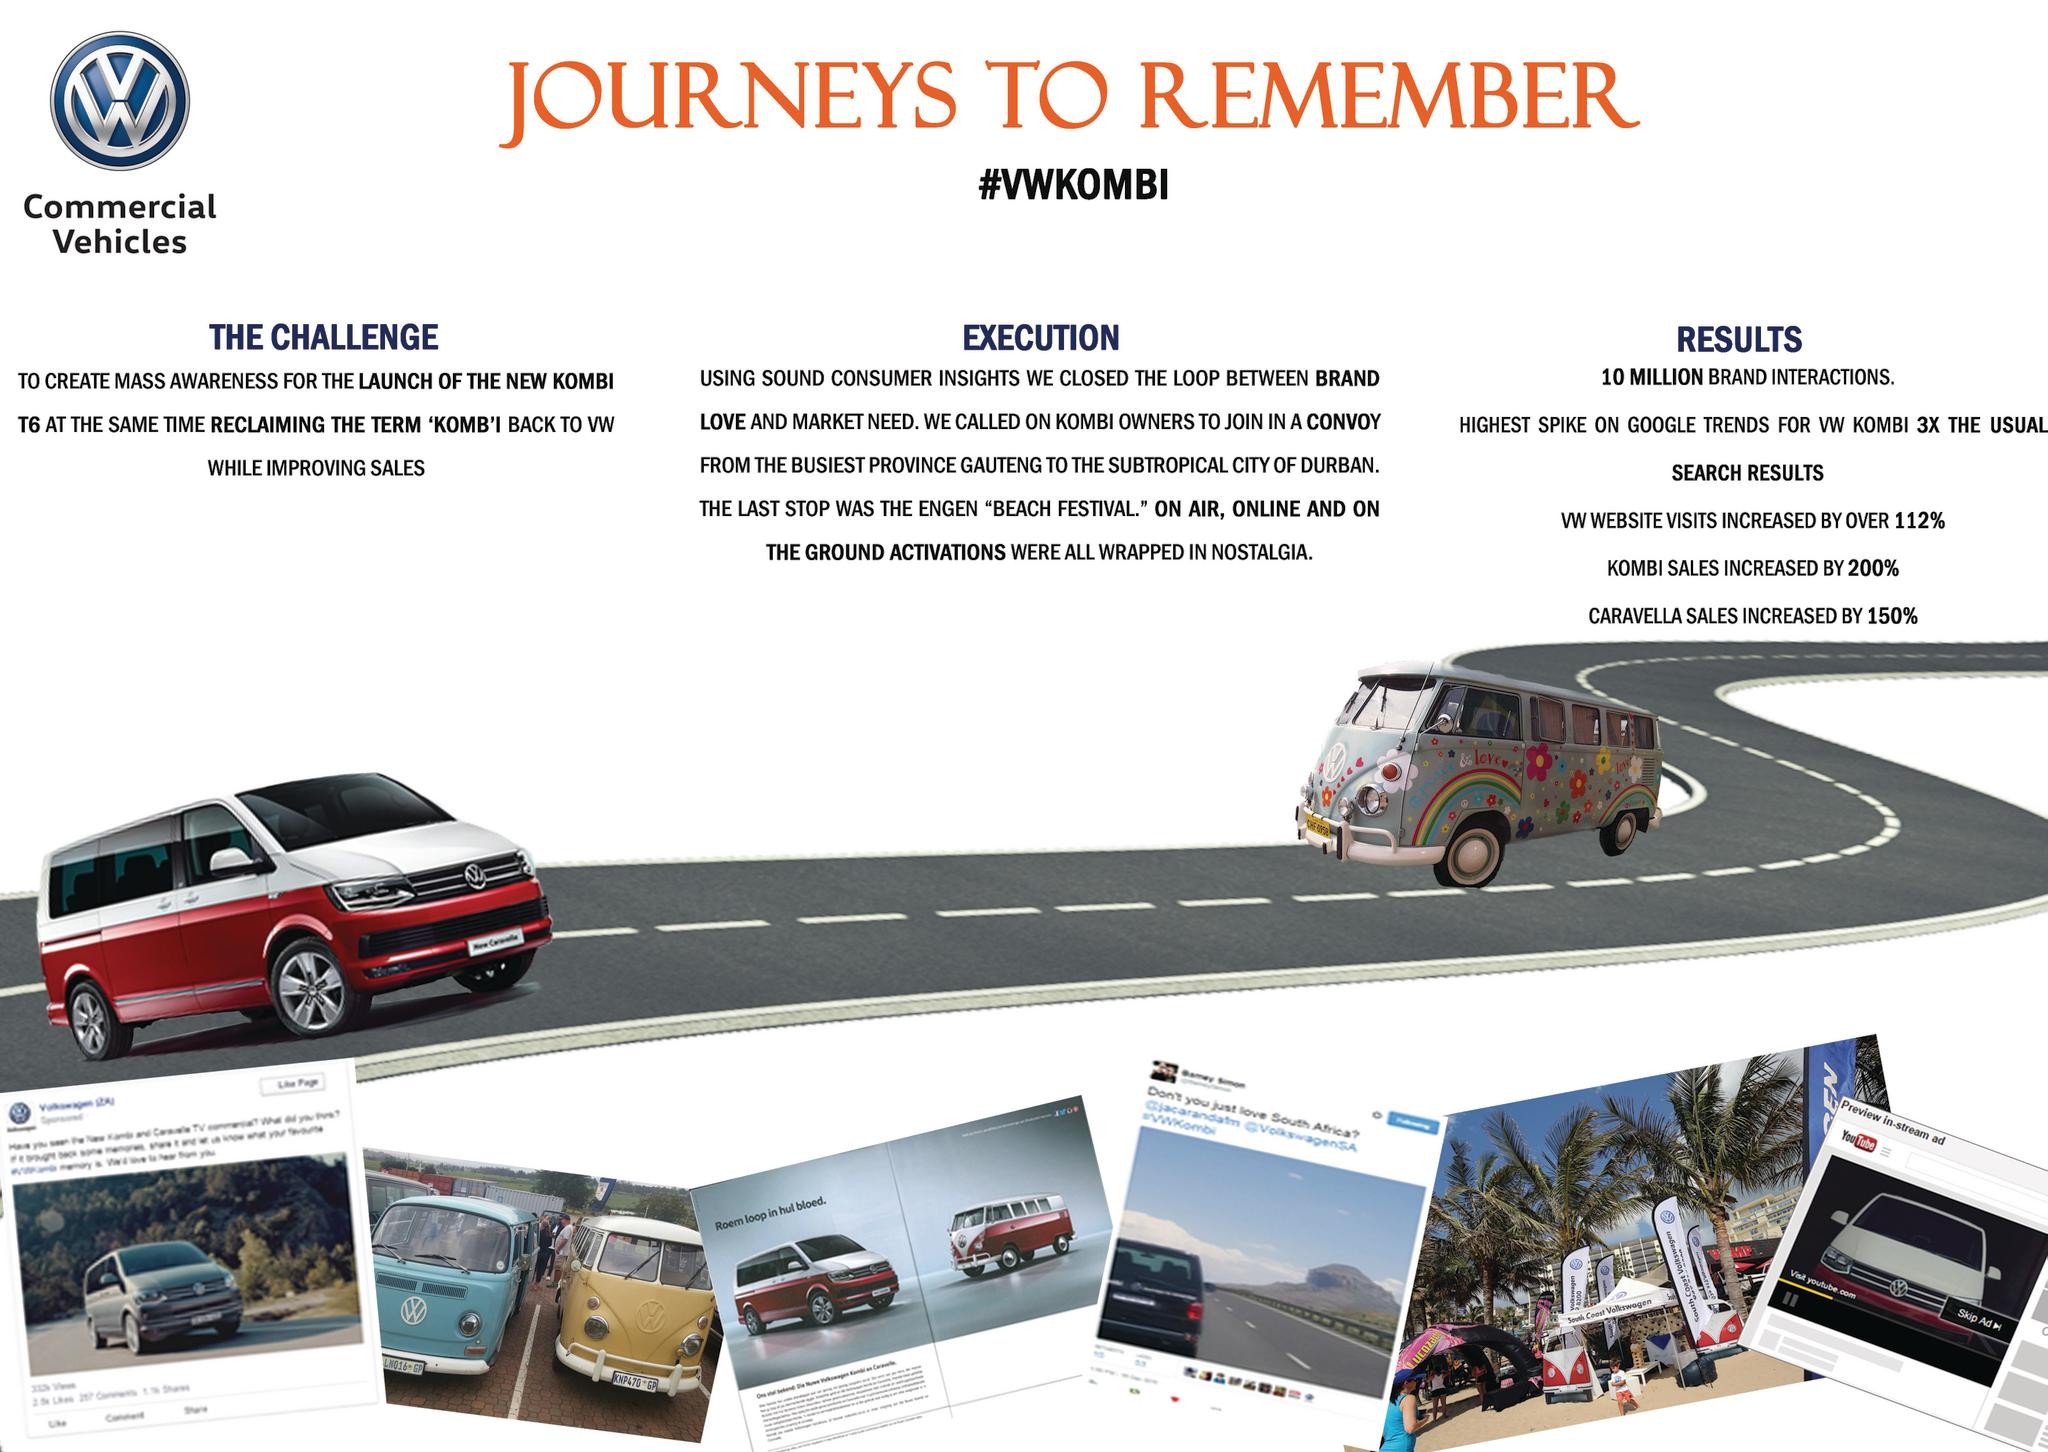 VW Kombi - Journeys to Remember